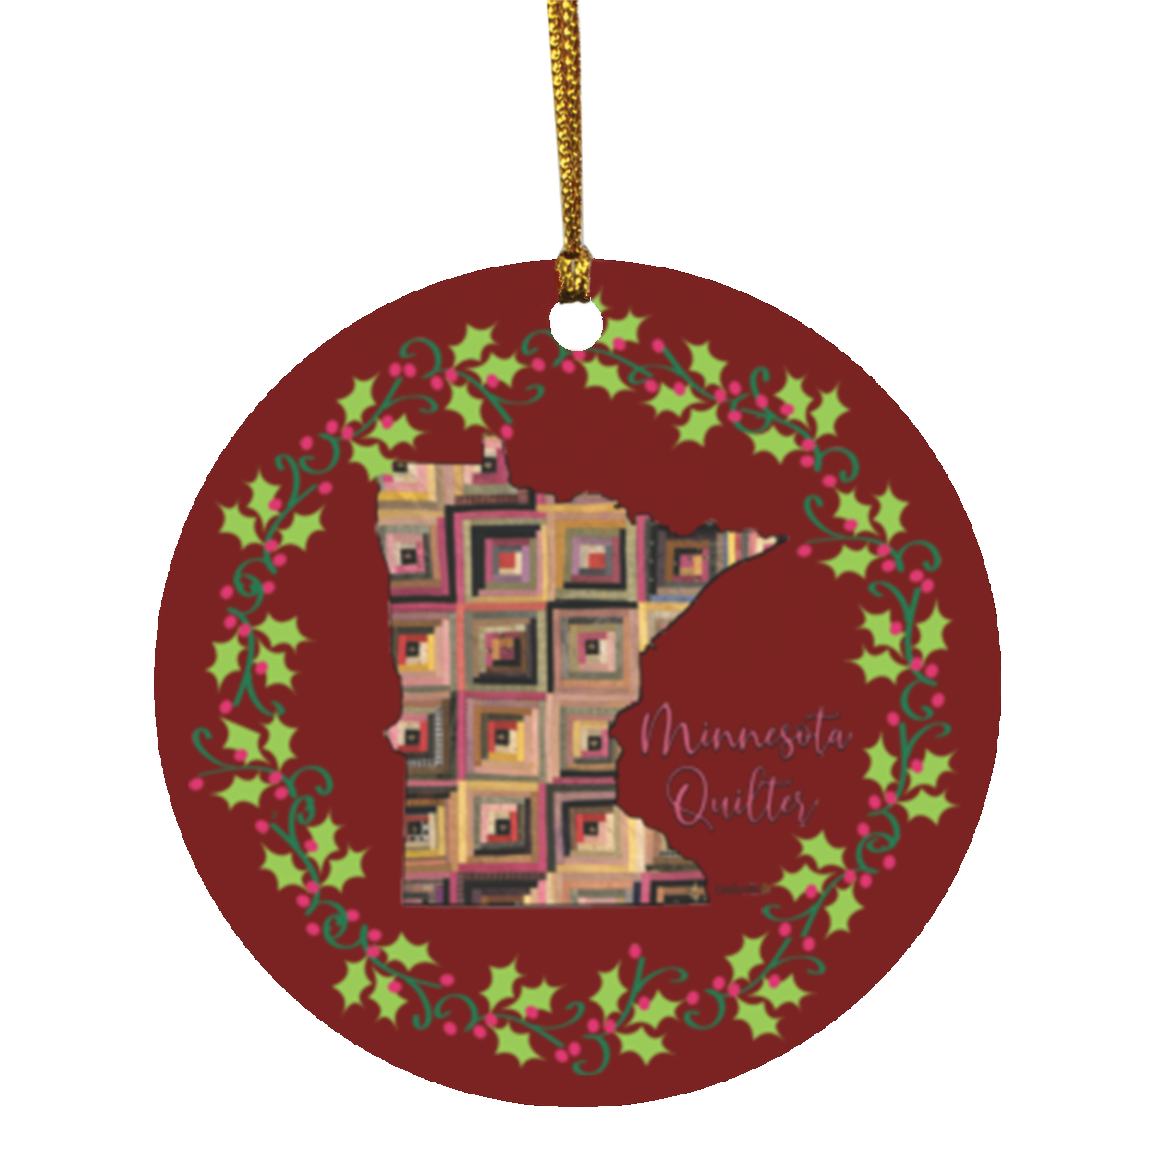 Minnesota Quilter Christmas Circle Ornament